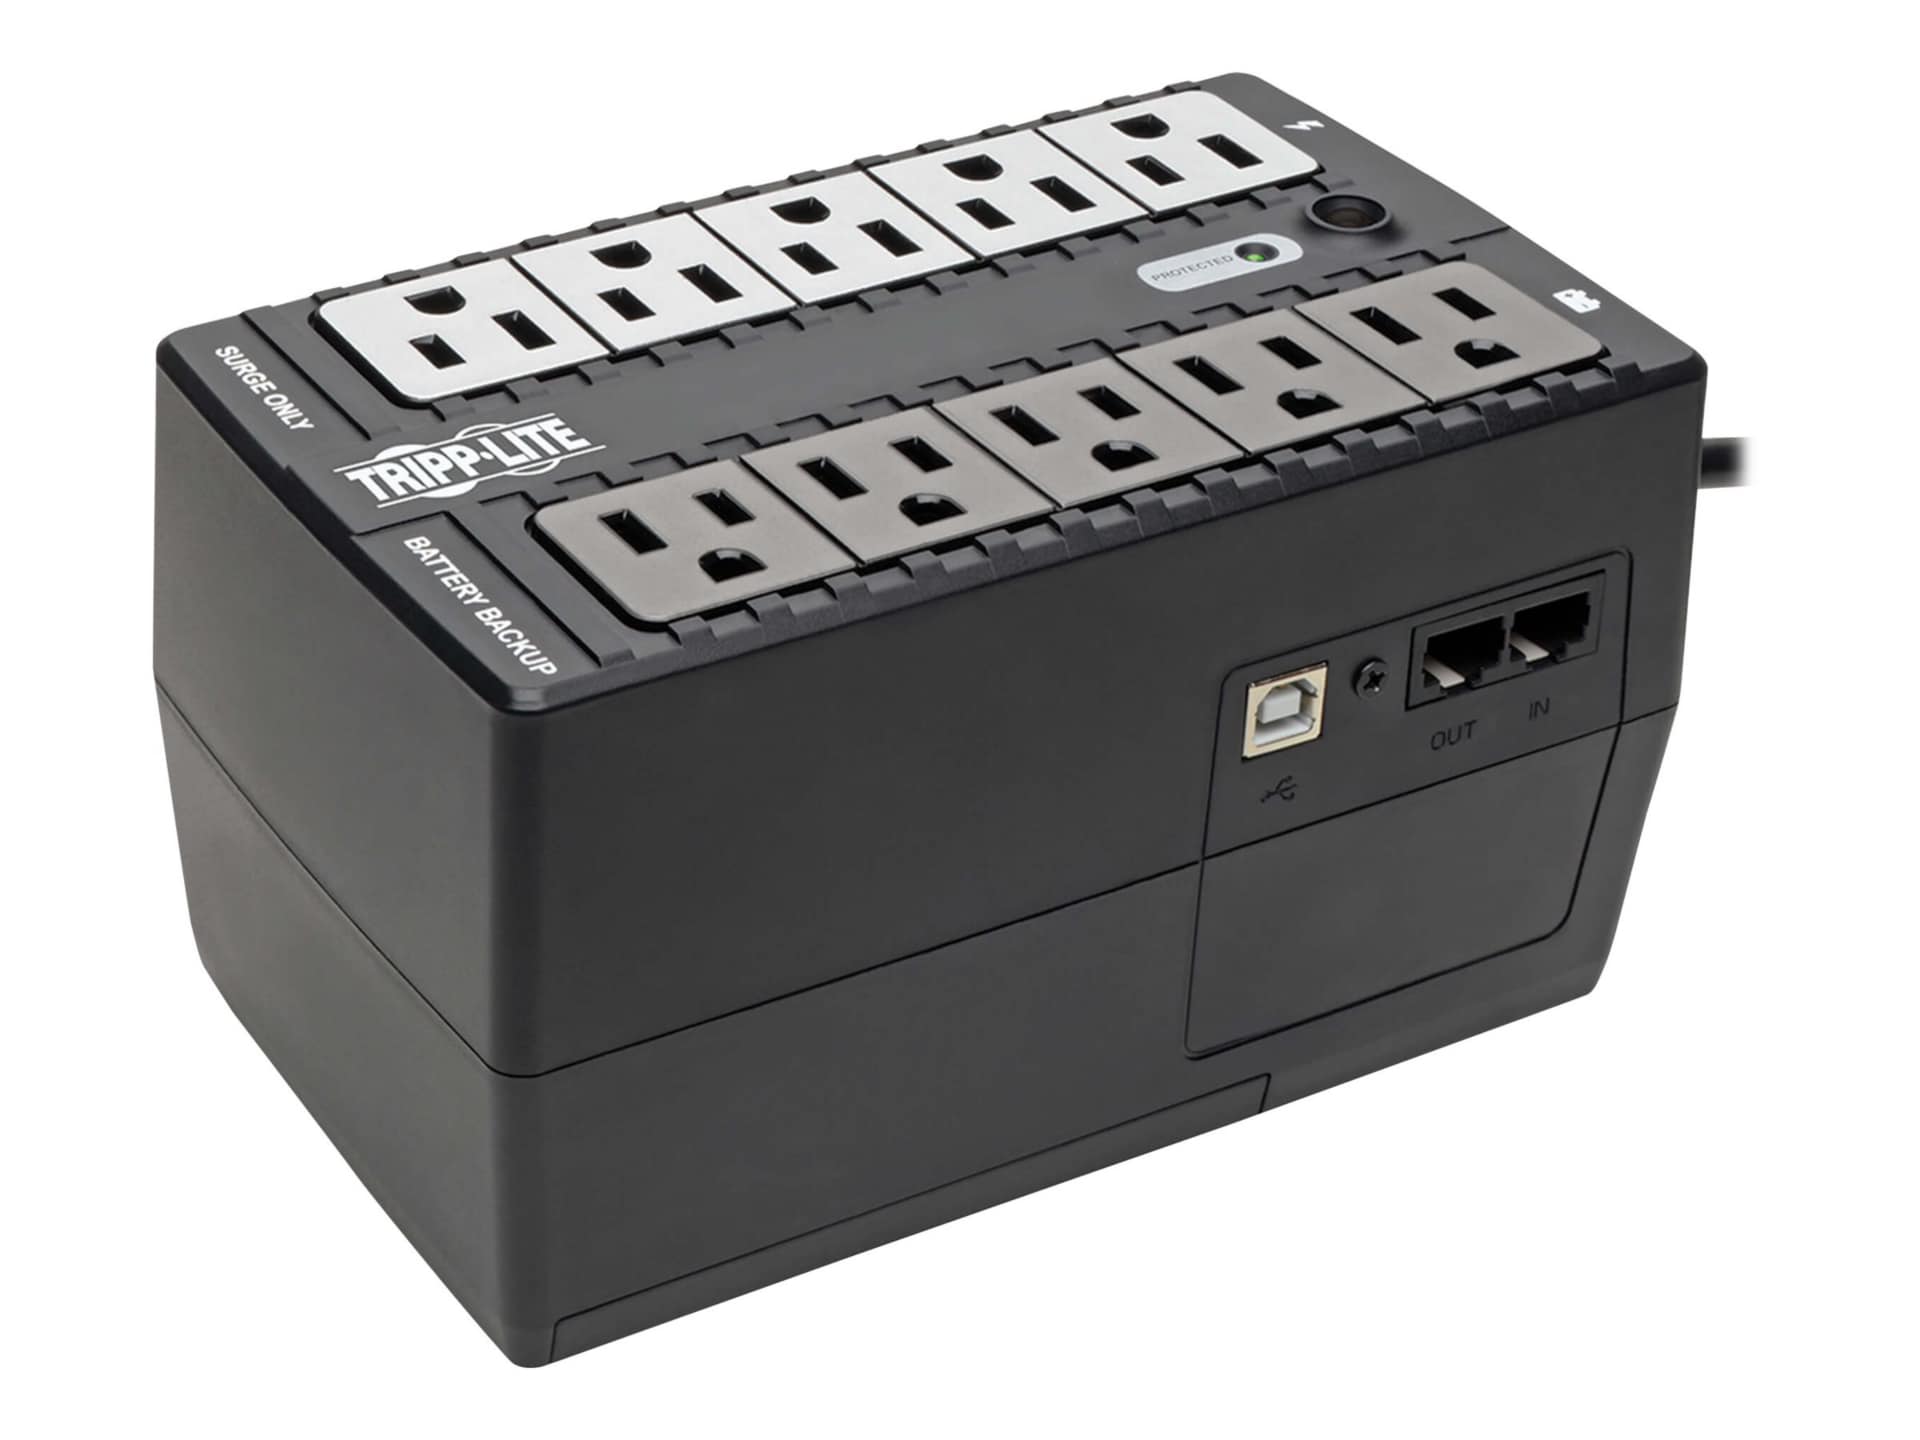 Tripp Lite 550VA UPS Desktop 120V Battery Back Up Compact